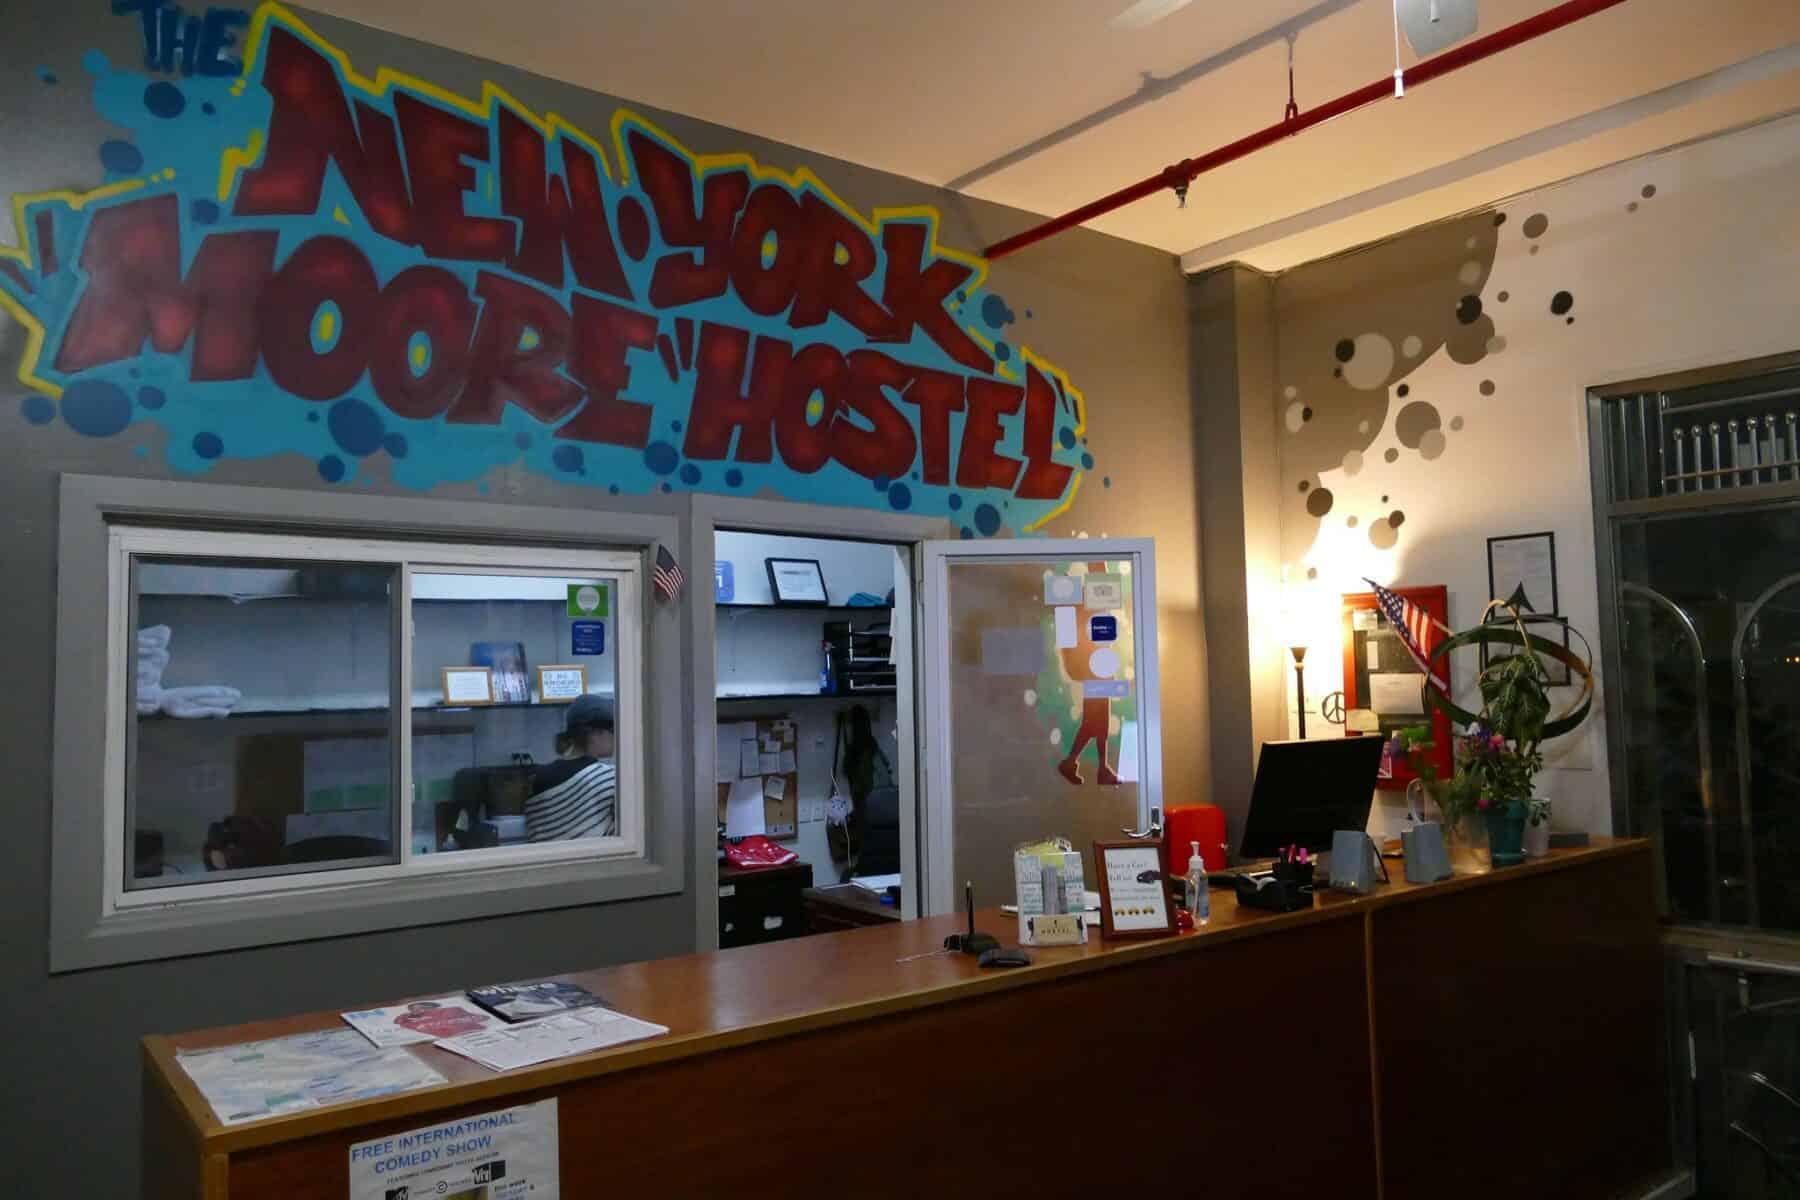 NY Moore Hostel check in